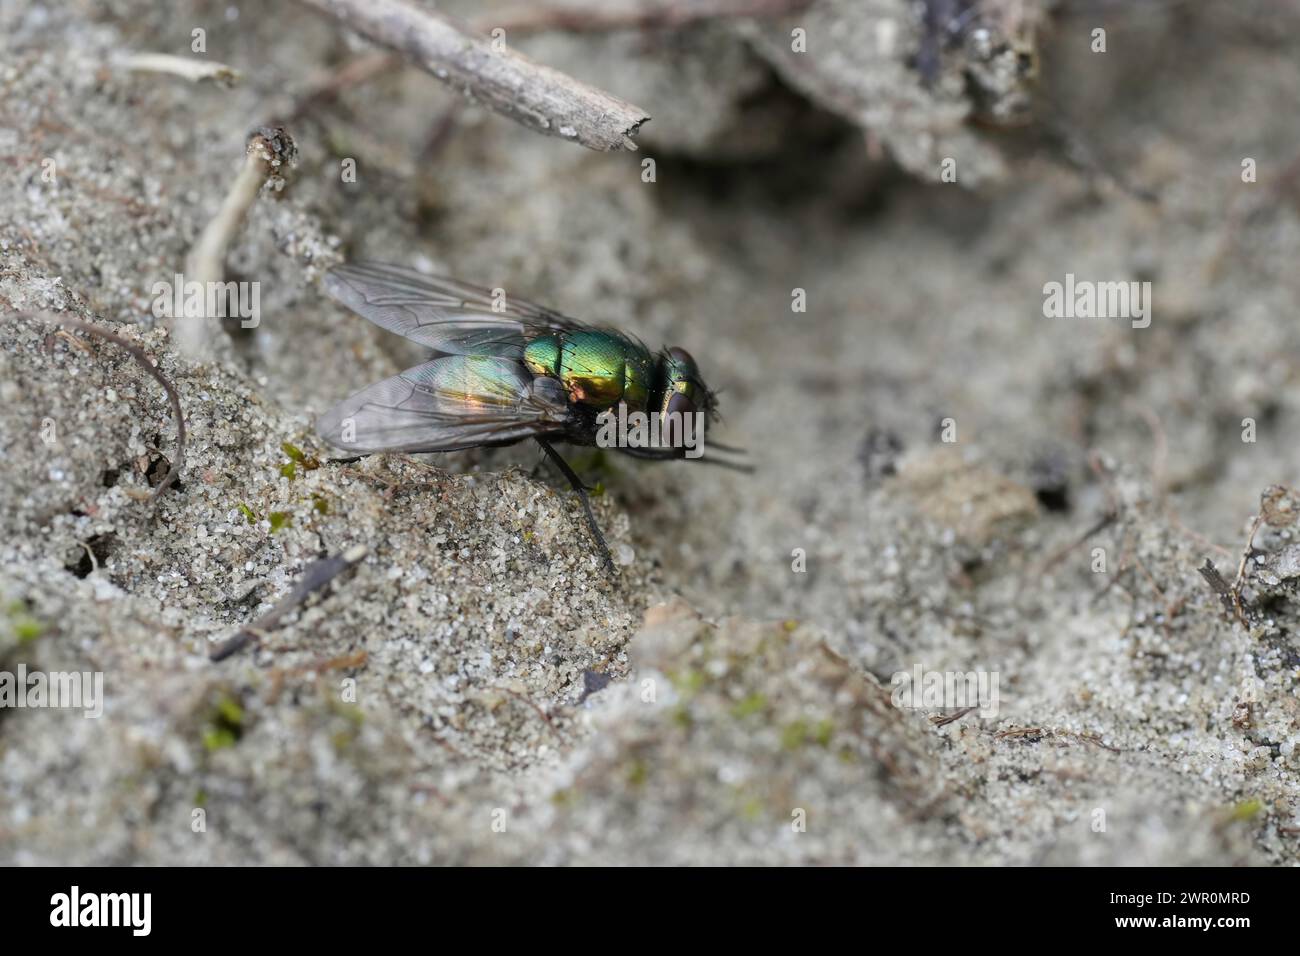 Detailed closeup on a bright metallic Green Pasture Fly, Neomyia cornicina, sitting on the ground Stock Photo